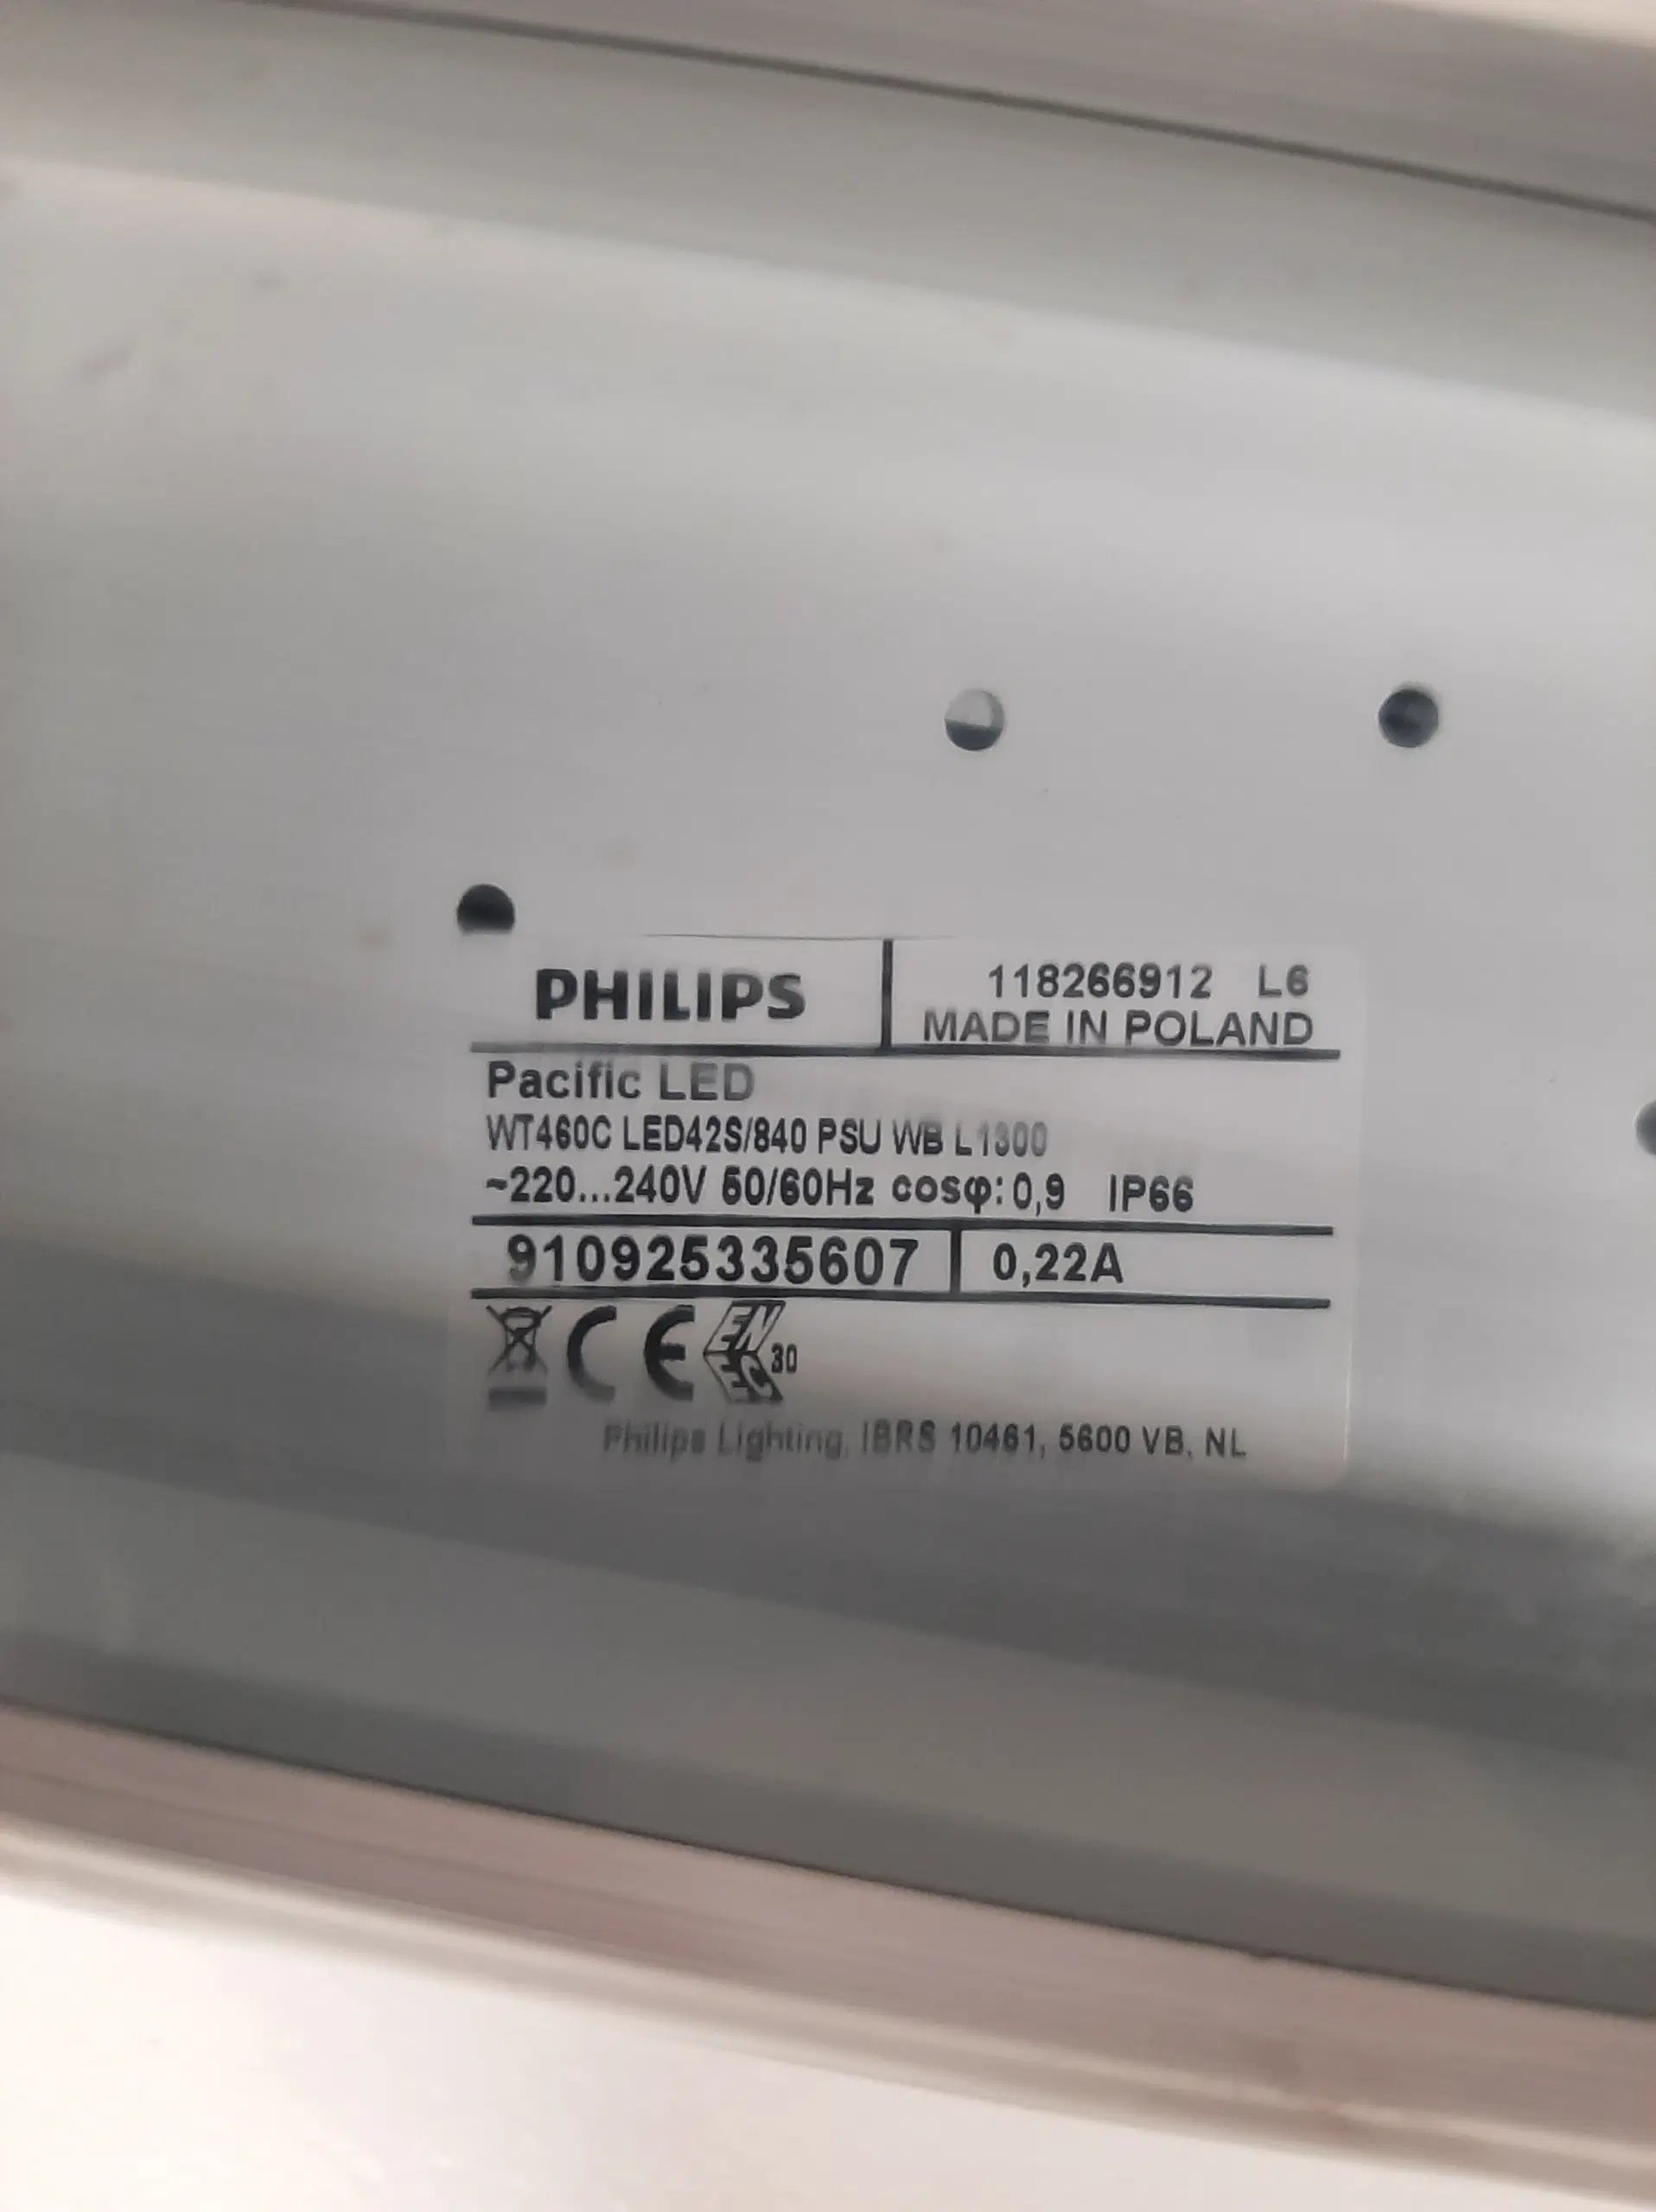 Philips pacific led wt480c industriarmatur 1300x96x96mm